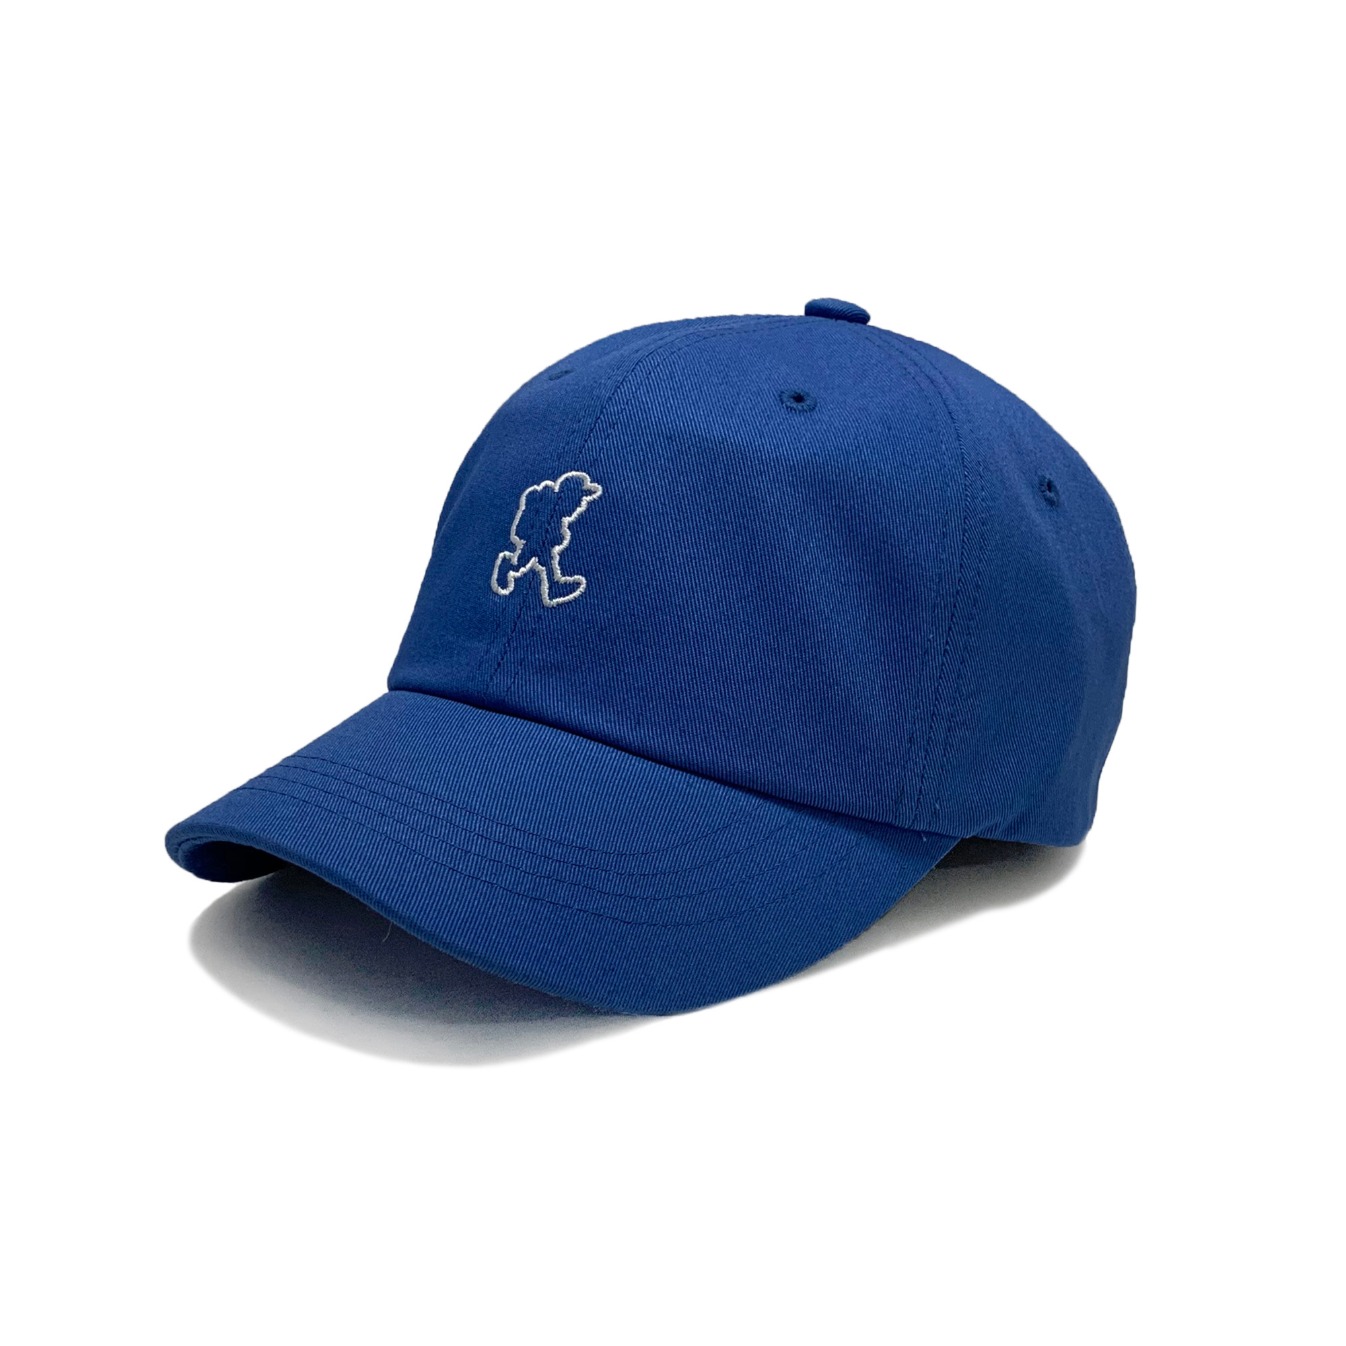 MCC ICON BALL CAP BLUE